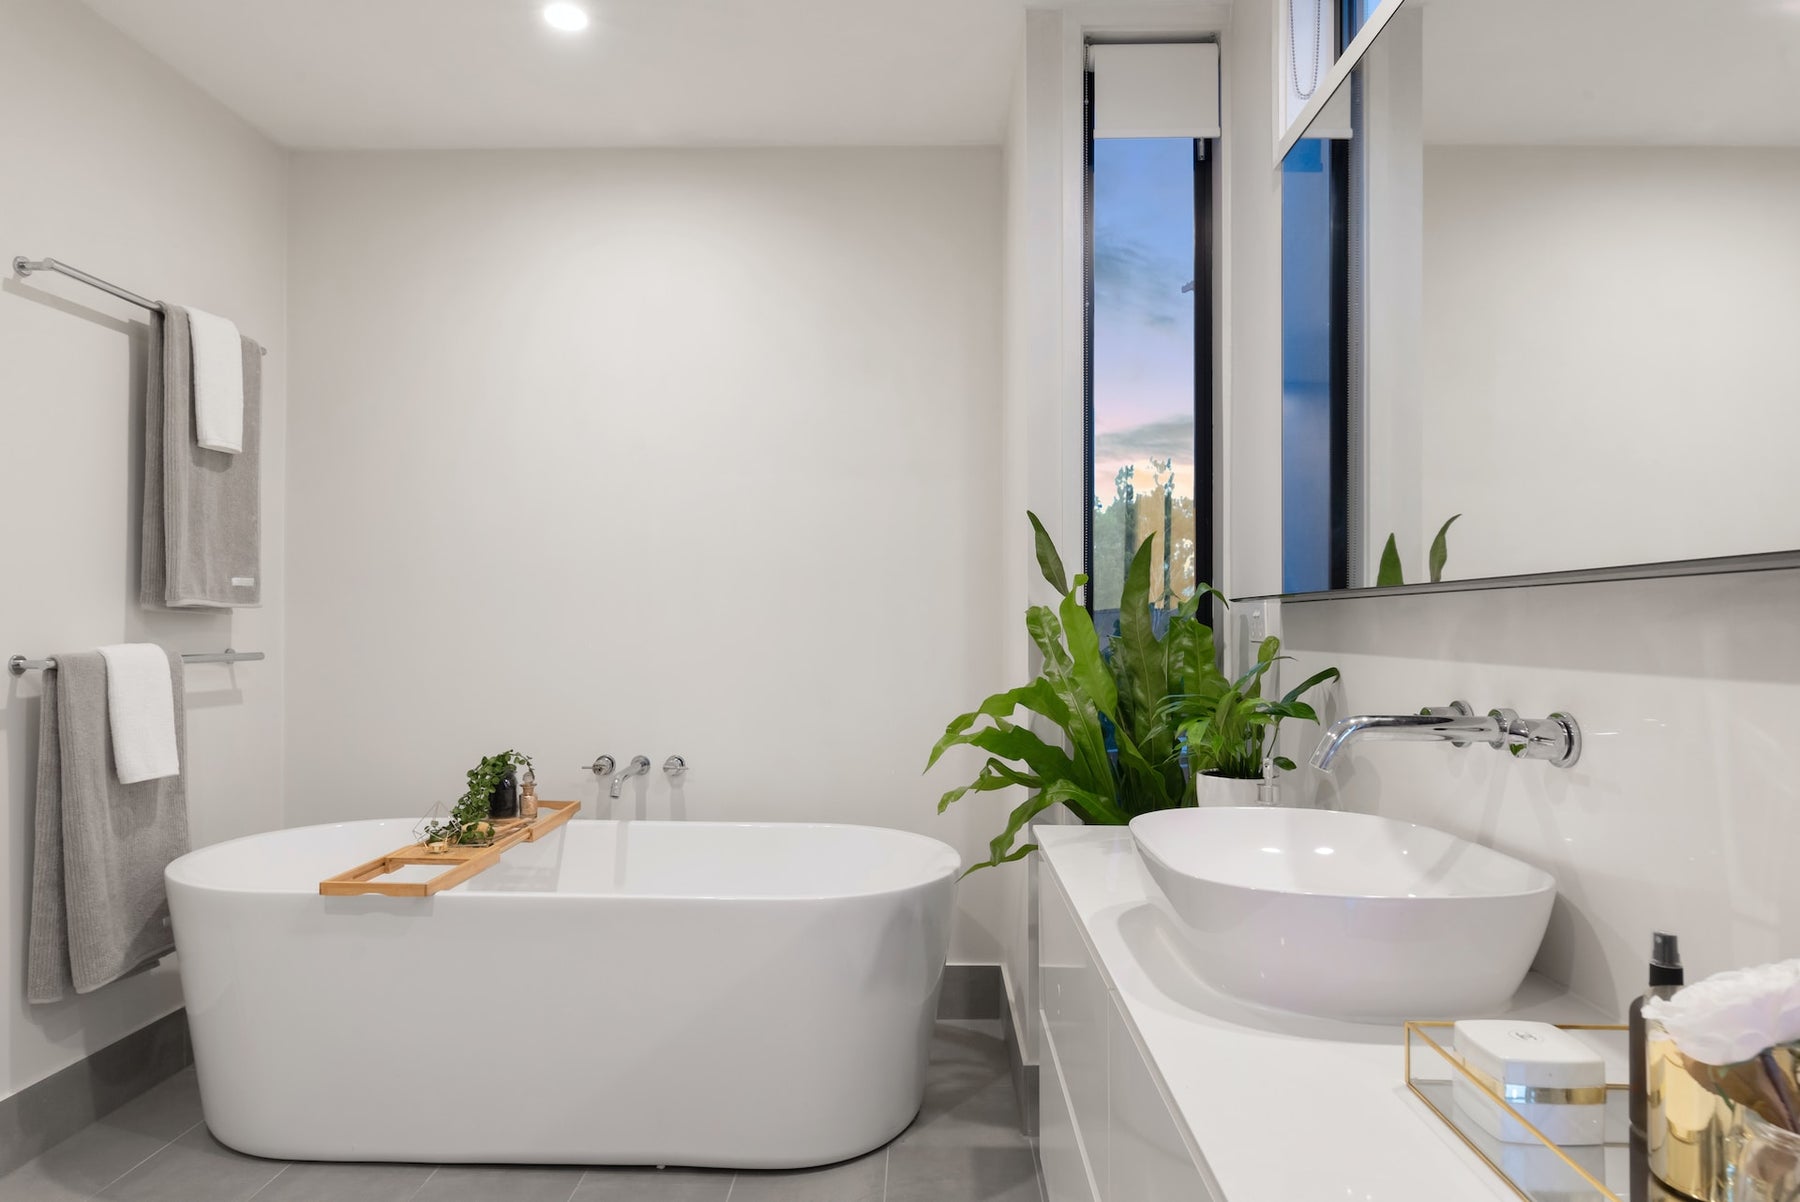 Enhance Your Bathroom Design with Undermount Sinks: A Stylish and Functional Choice